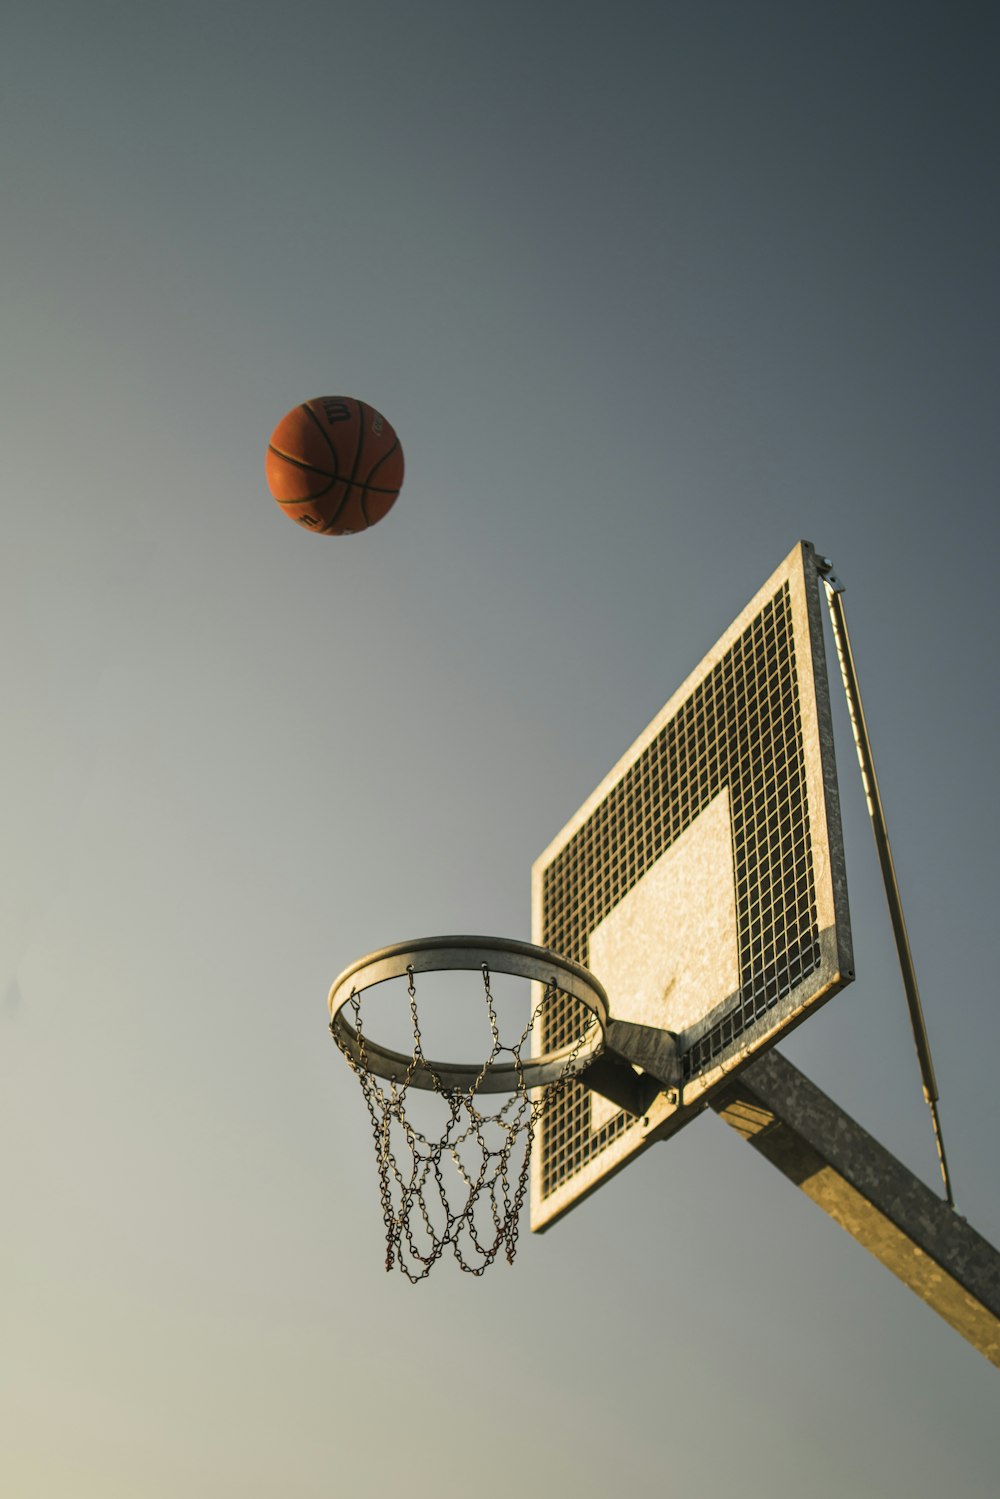 Basketball auf Basketballkorb unter blauem Himmel tagsüber